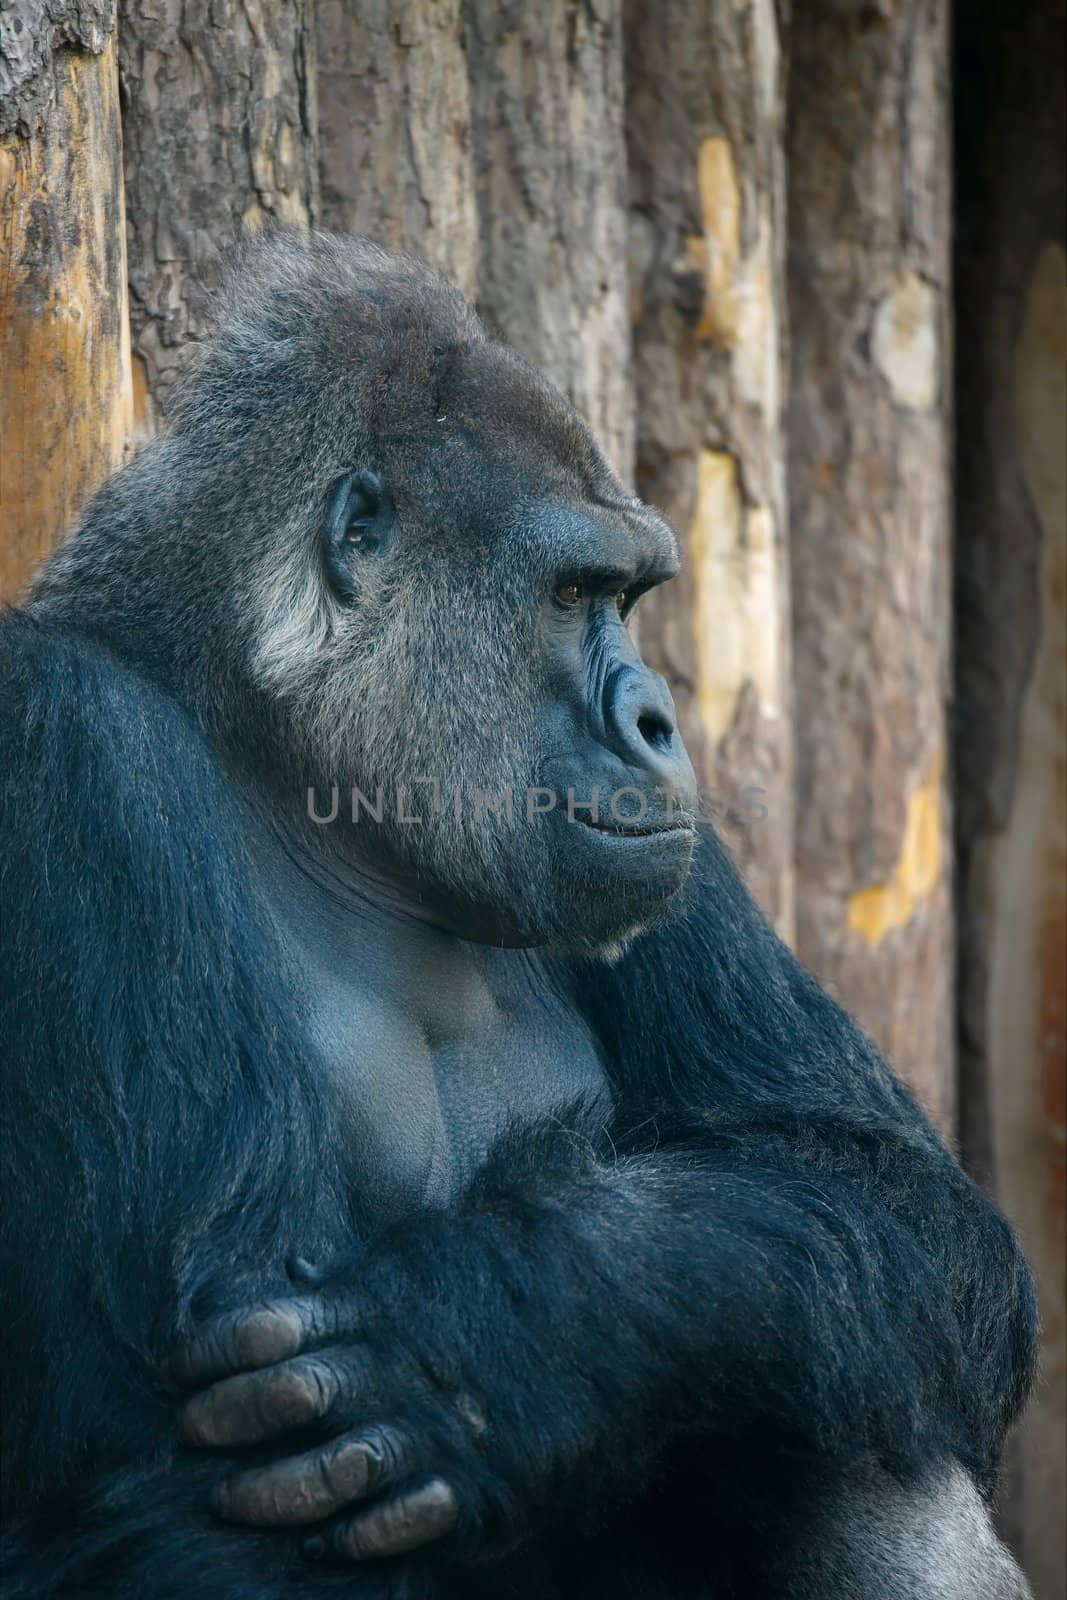 Male, adult gorilla portrait